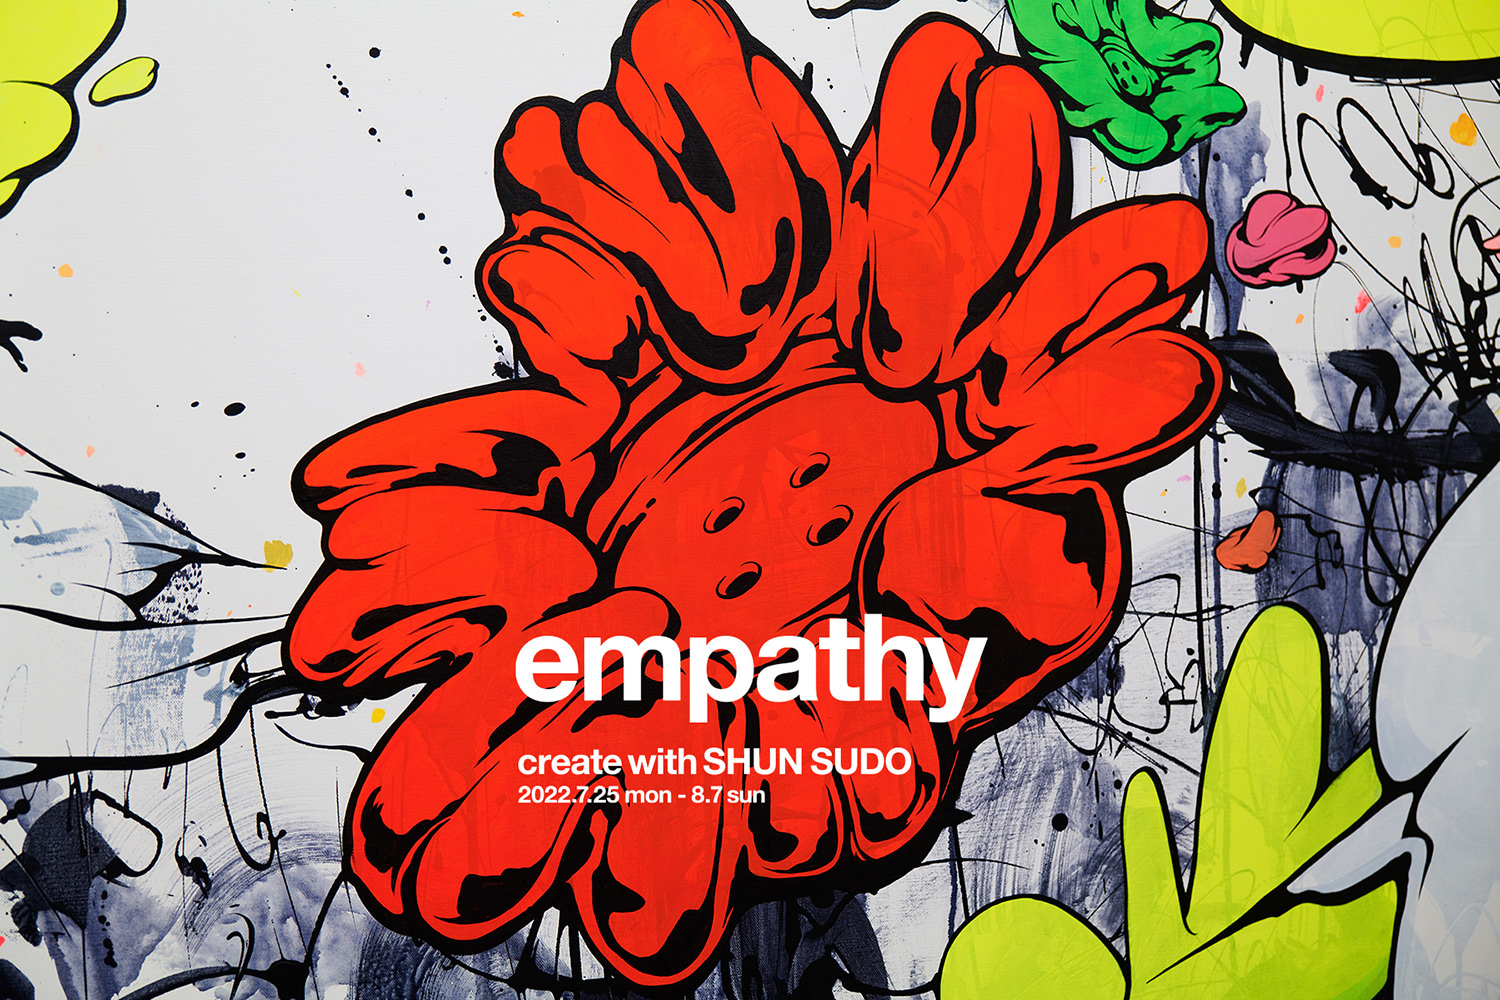 empathy - create with SHUN SUDO 告知ビジュアル